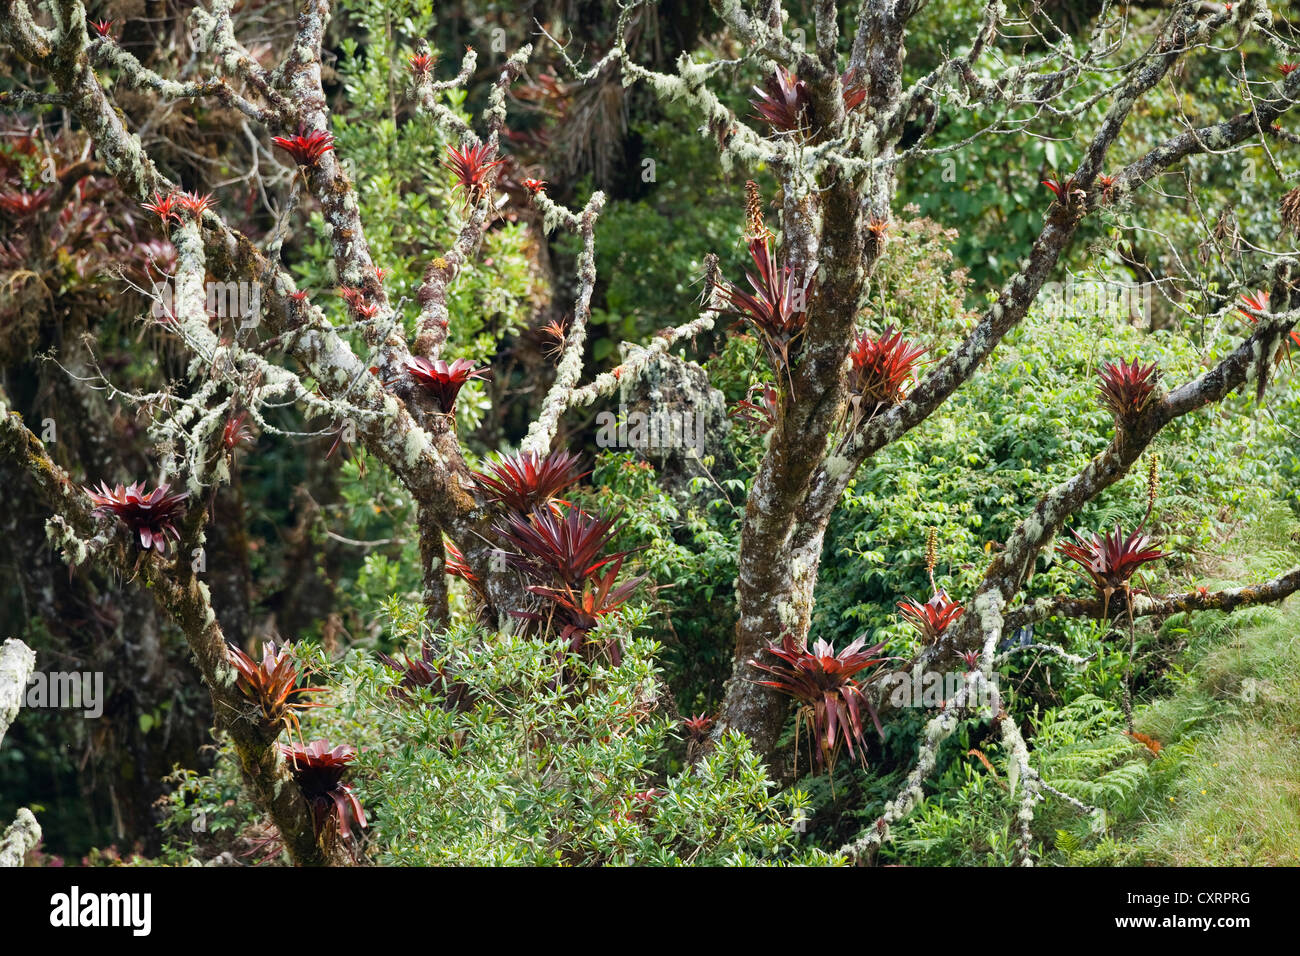 Tree overgrown with bromeliads in the mountain rainforest at Cerro de la Muerte, Costa Rica, Central America Stock Photo